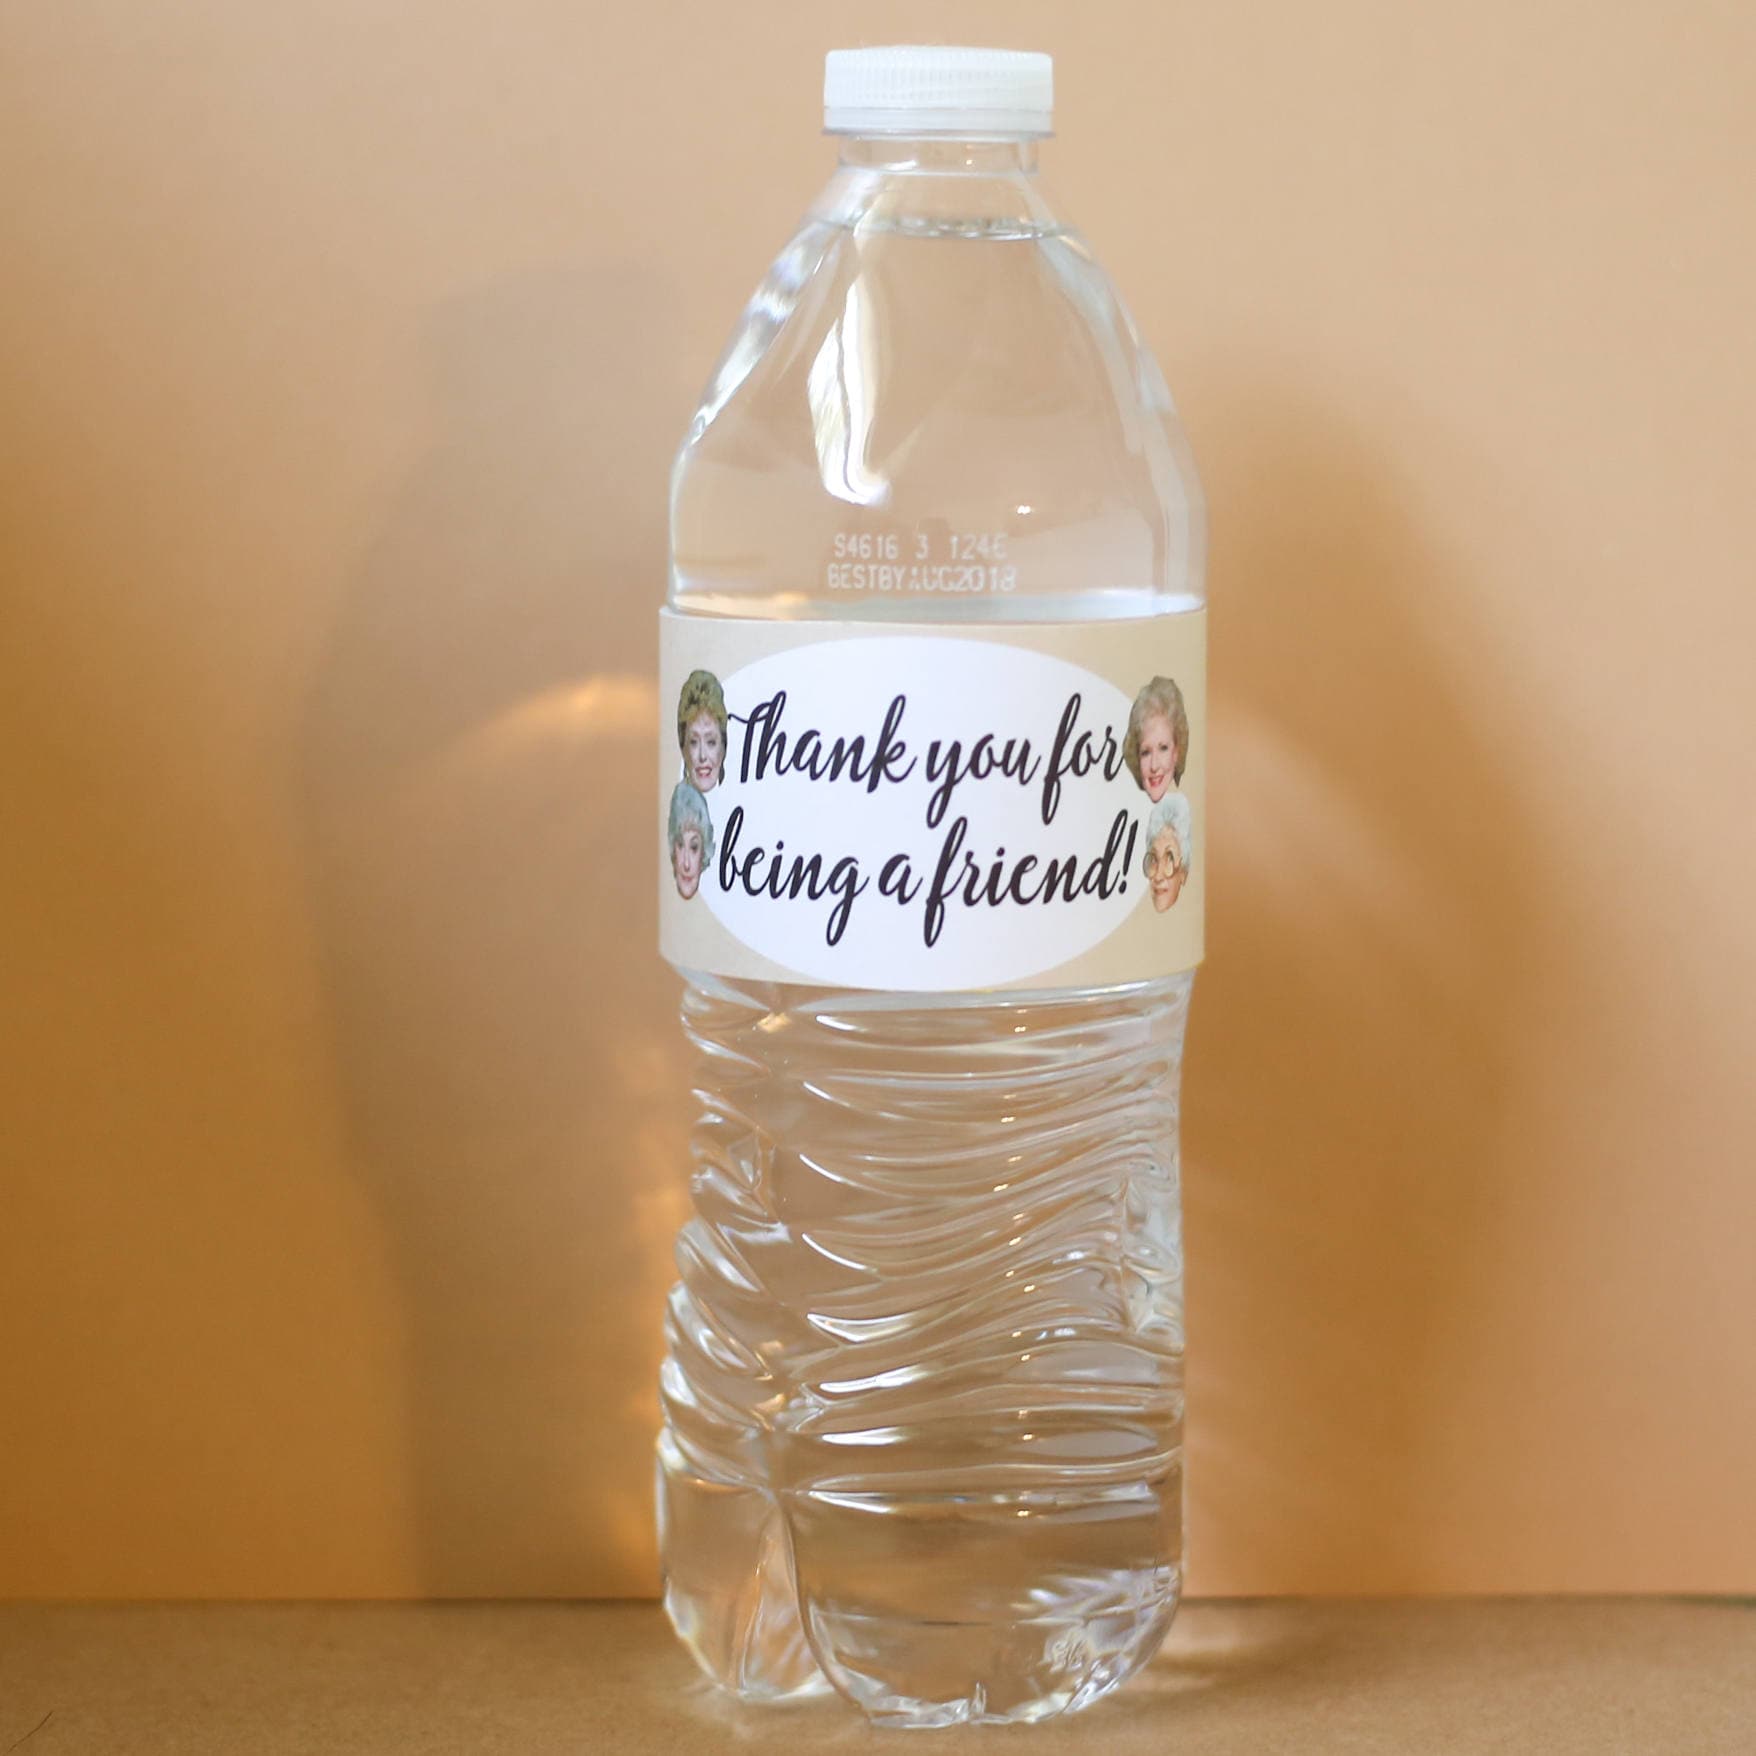 Golden Girls Water-bottles Gifts & Merchandise for Sale